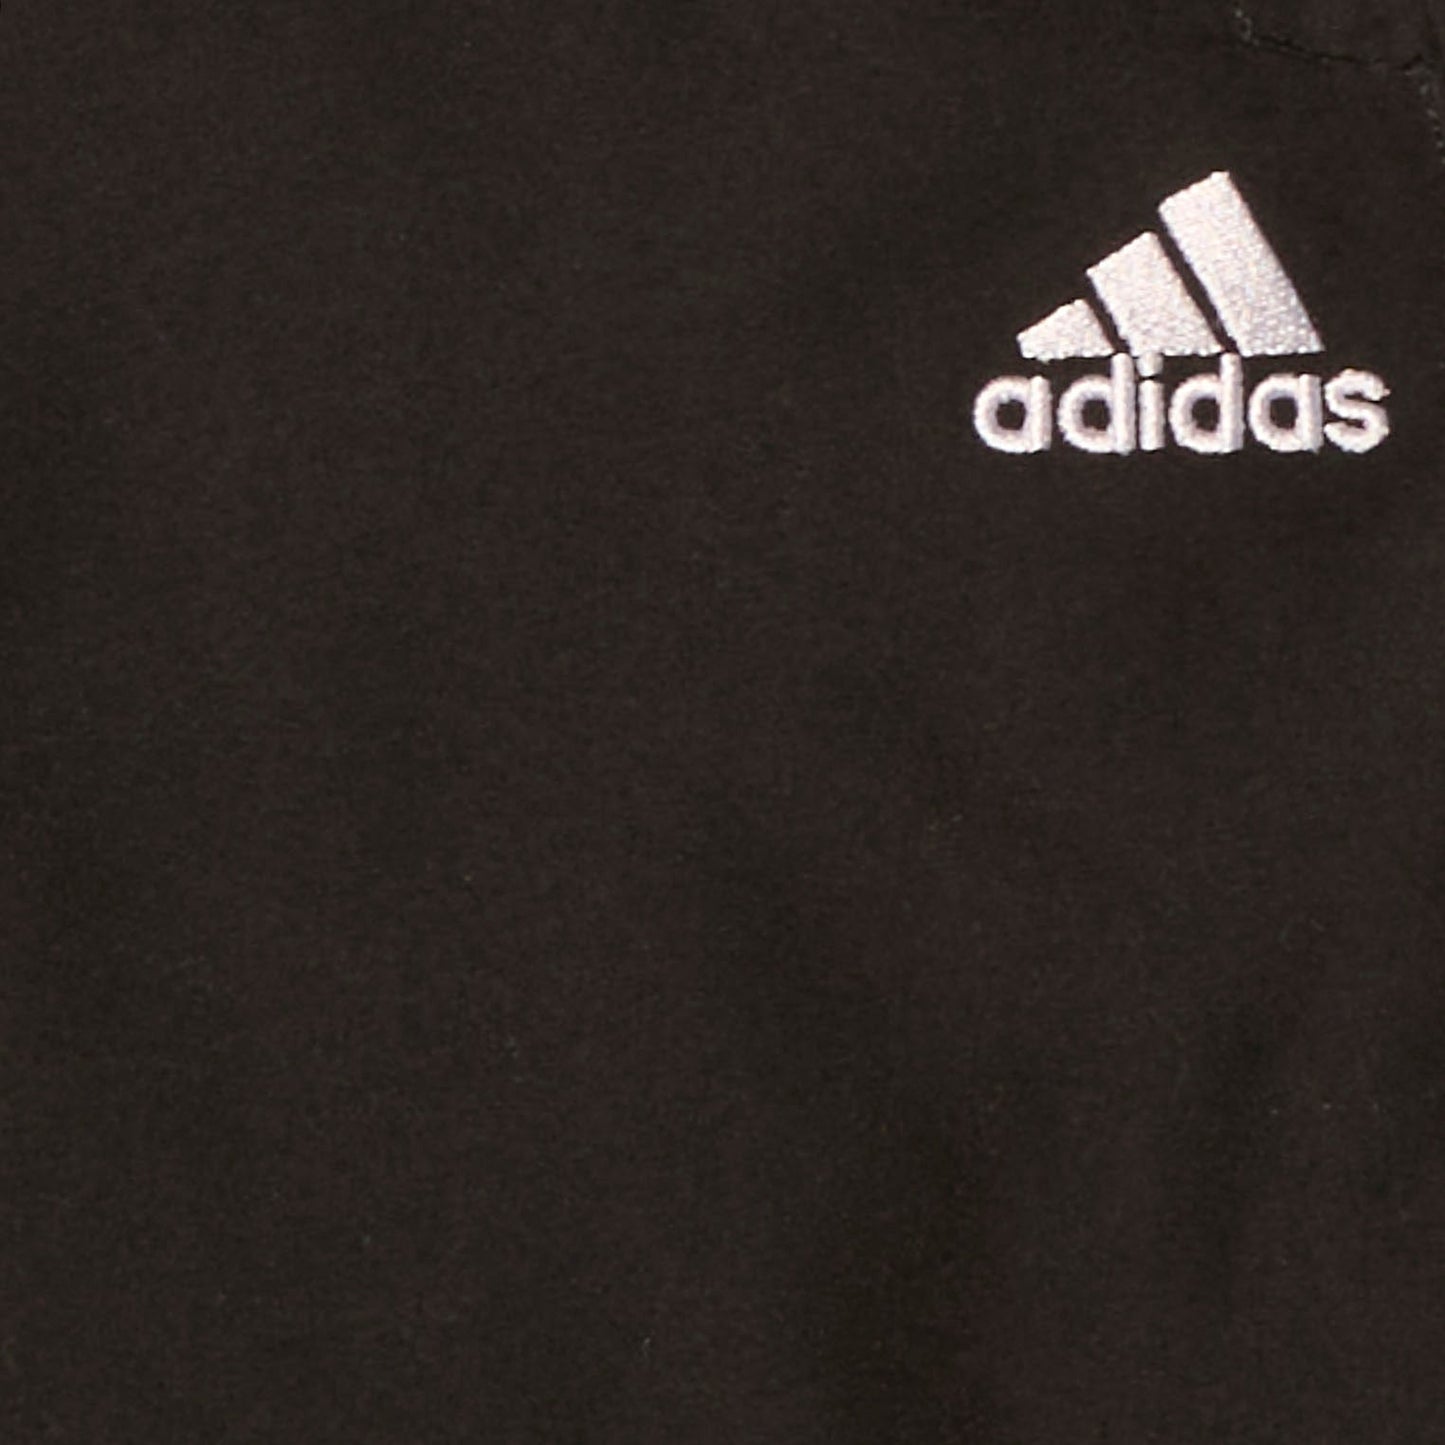 Adidas Striped Track Pants - XL